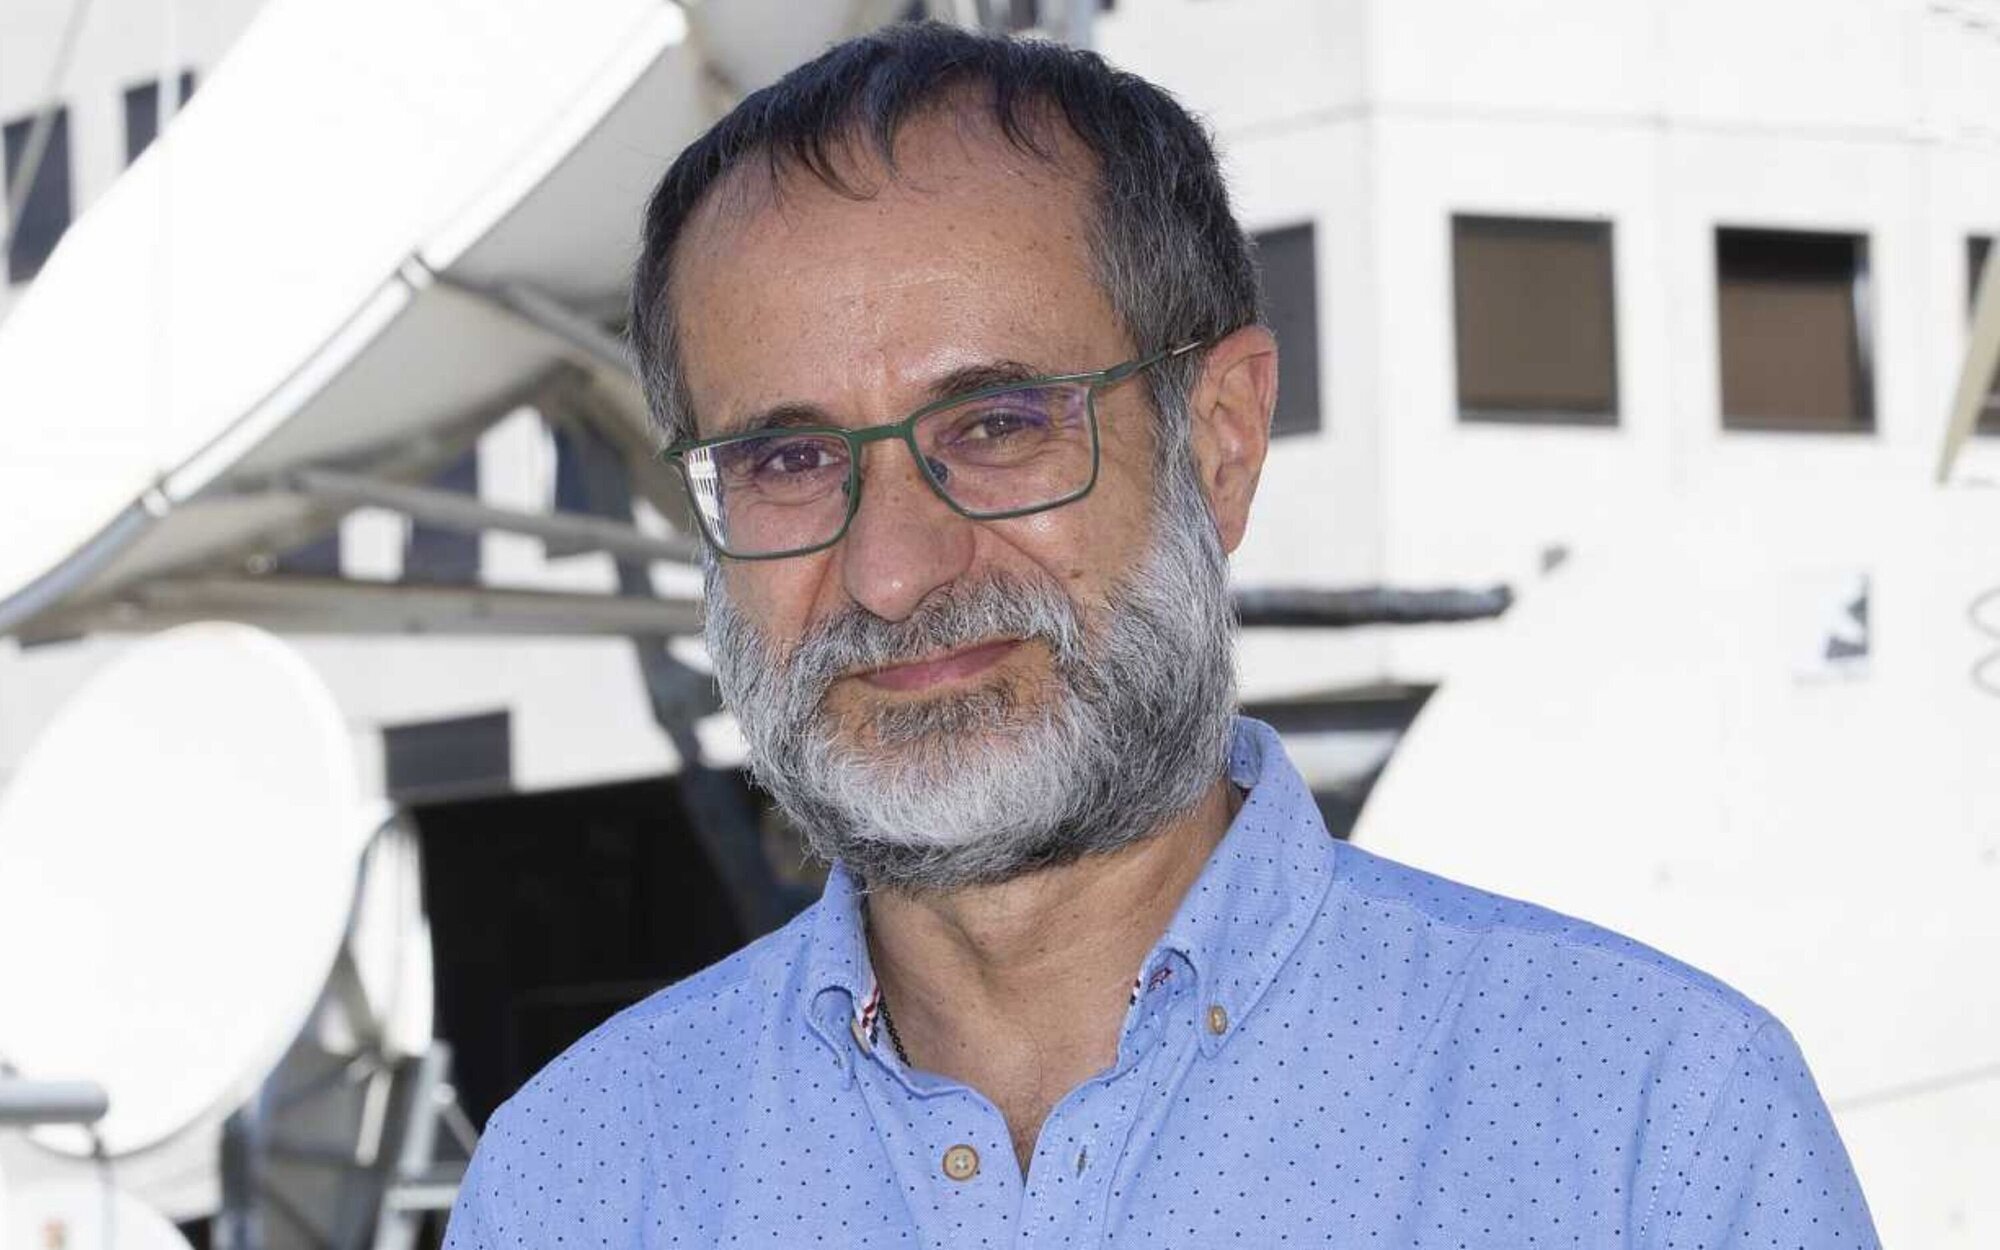 Dimite Esteve Crespo, director de Contenidos Informativos de RTVE, tras 10 meses al frente